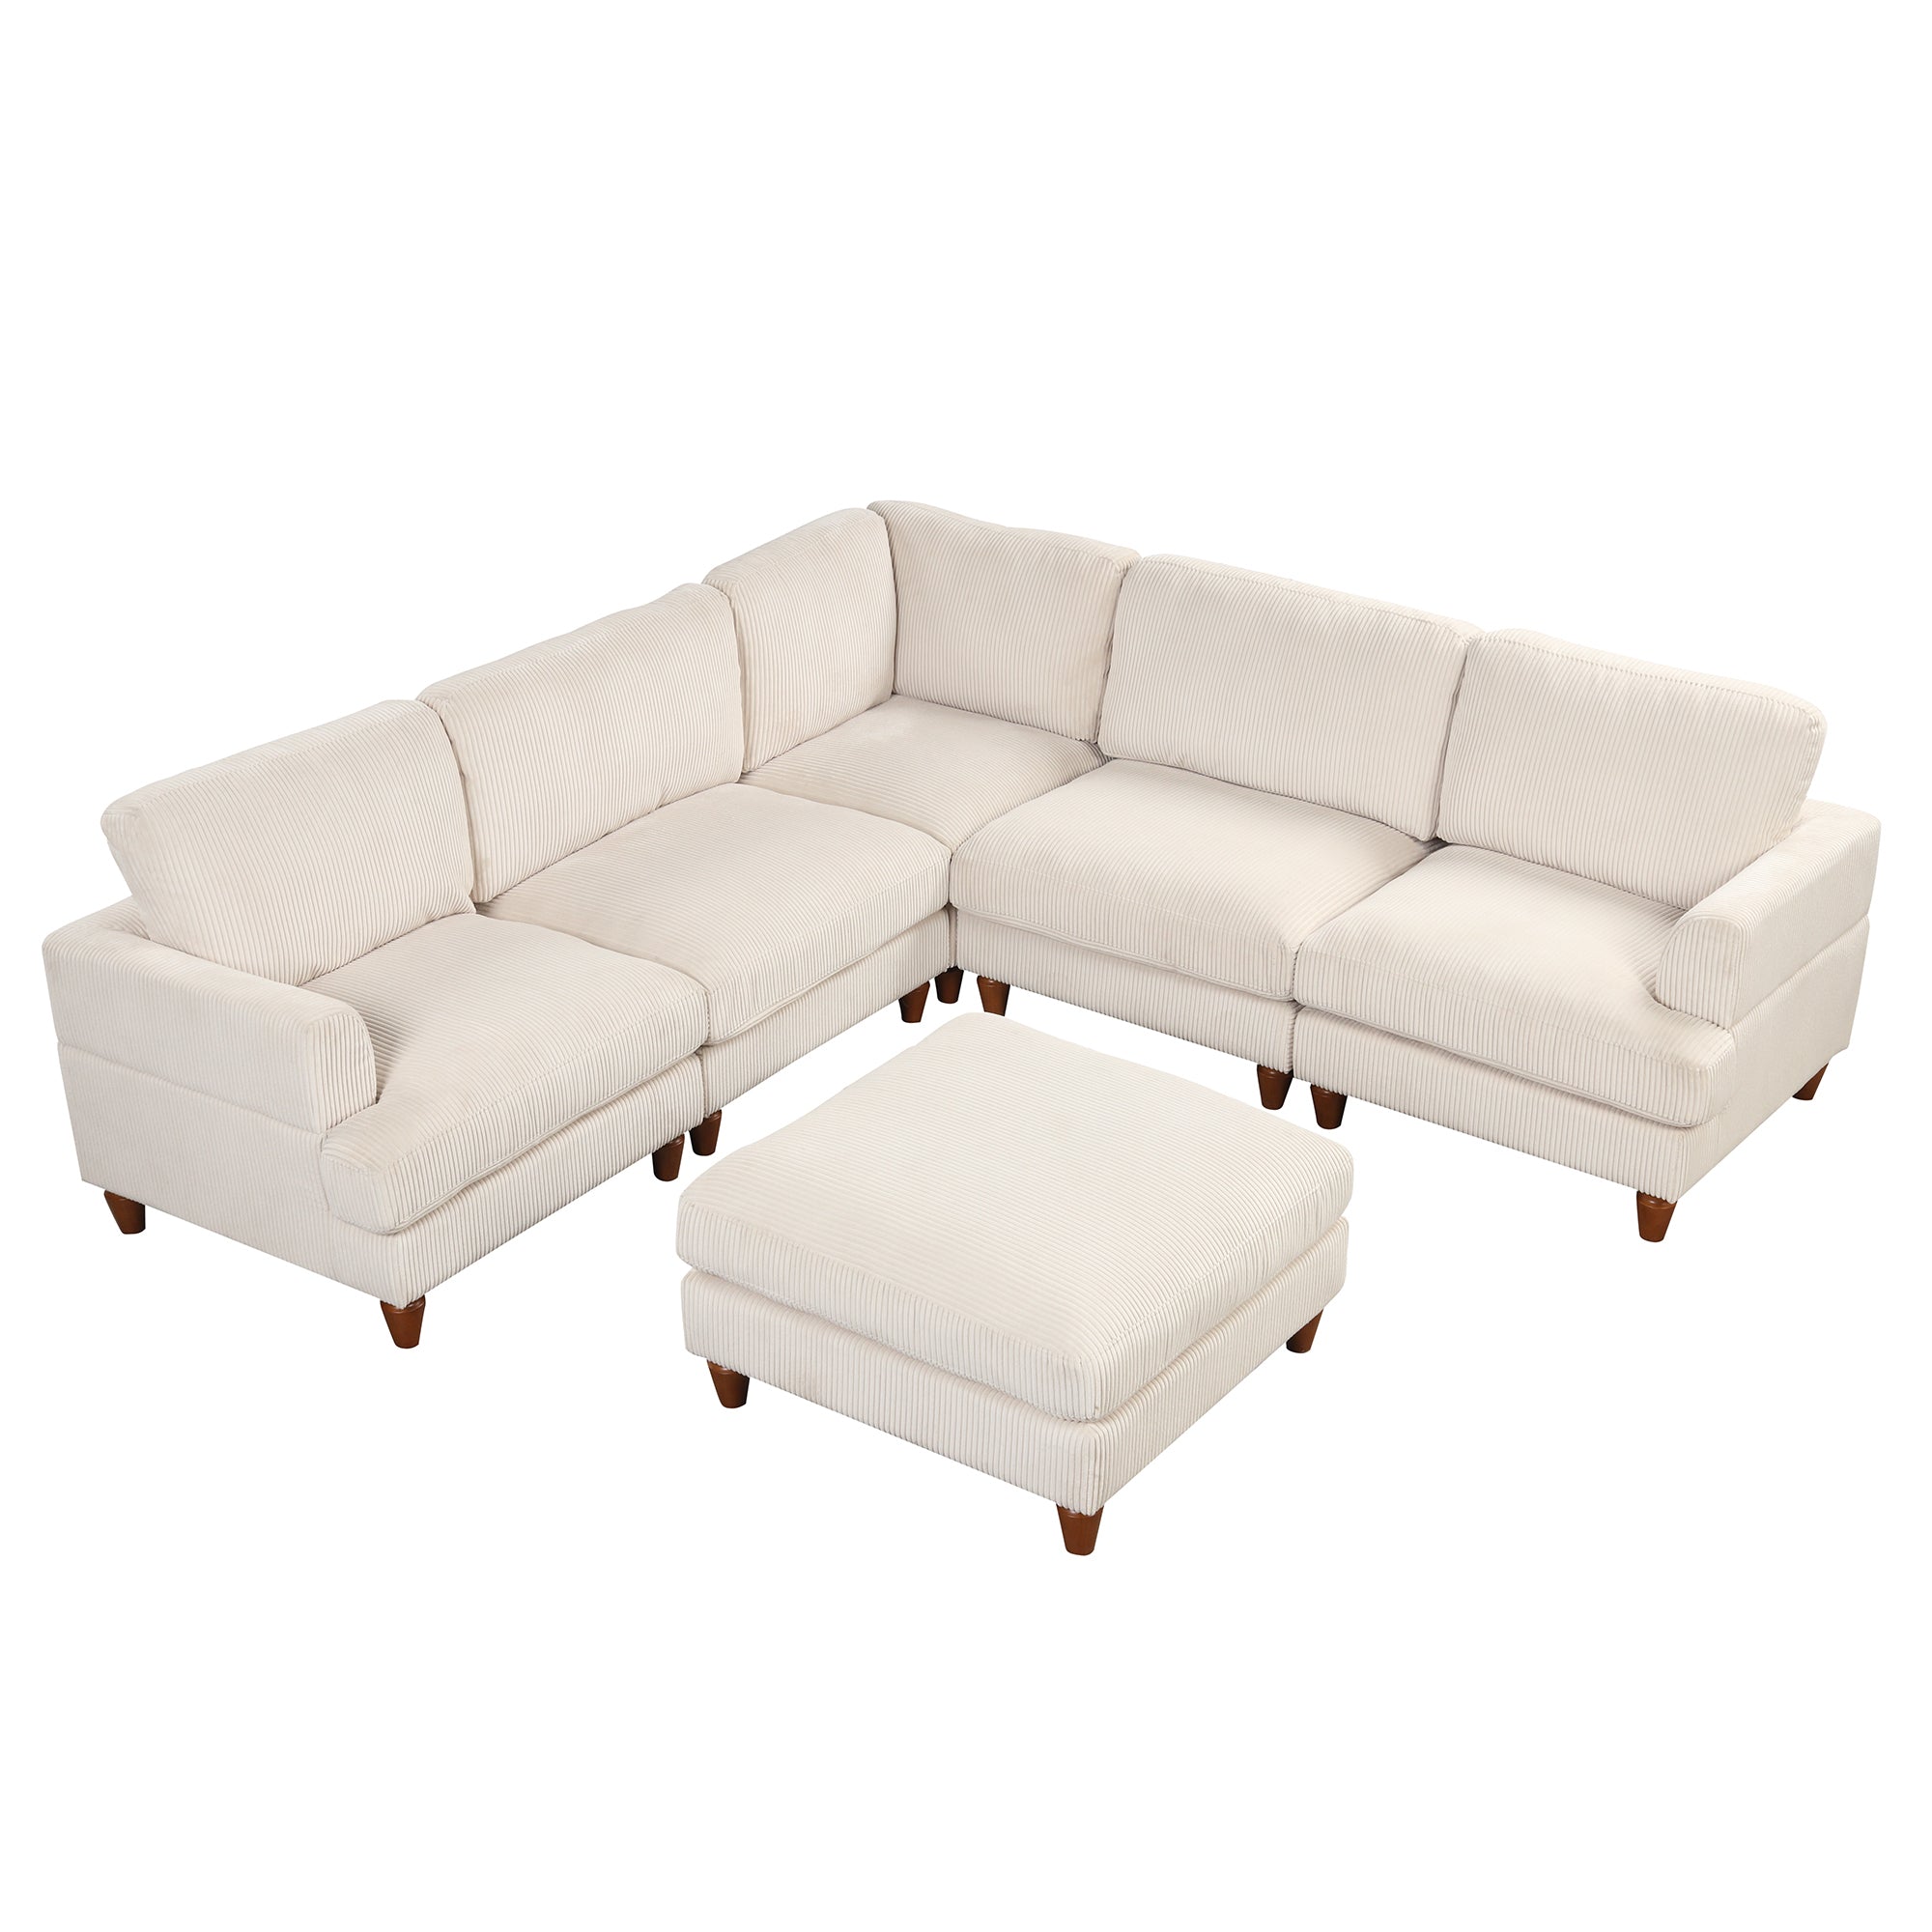 Modular Sectional Sofa: L-Shaped Ottoman, Beige - Spacious